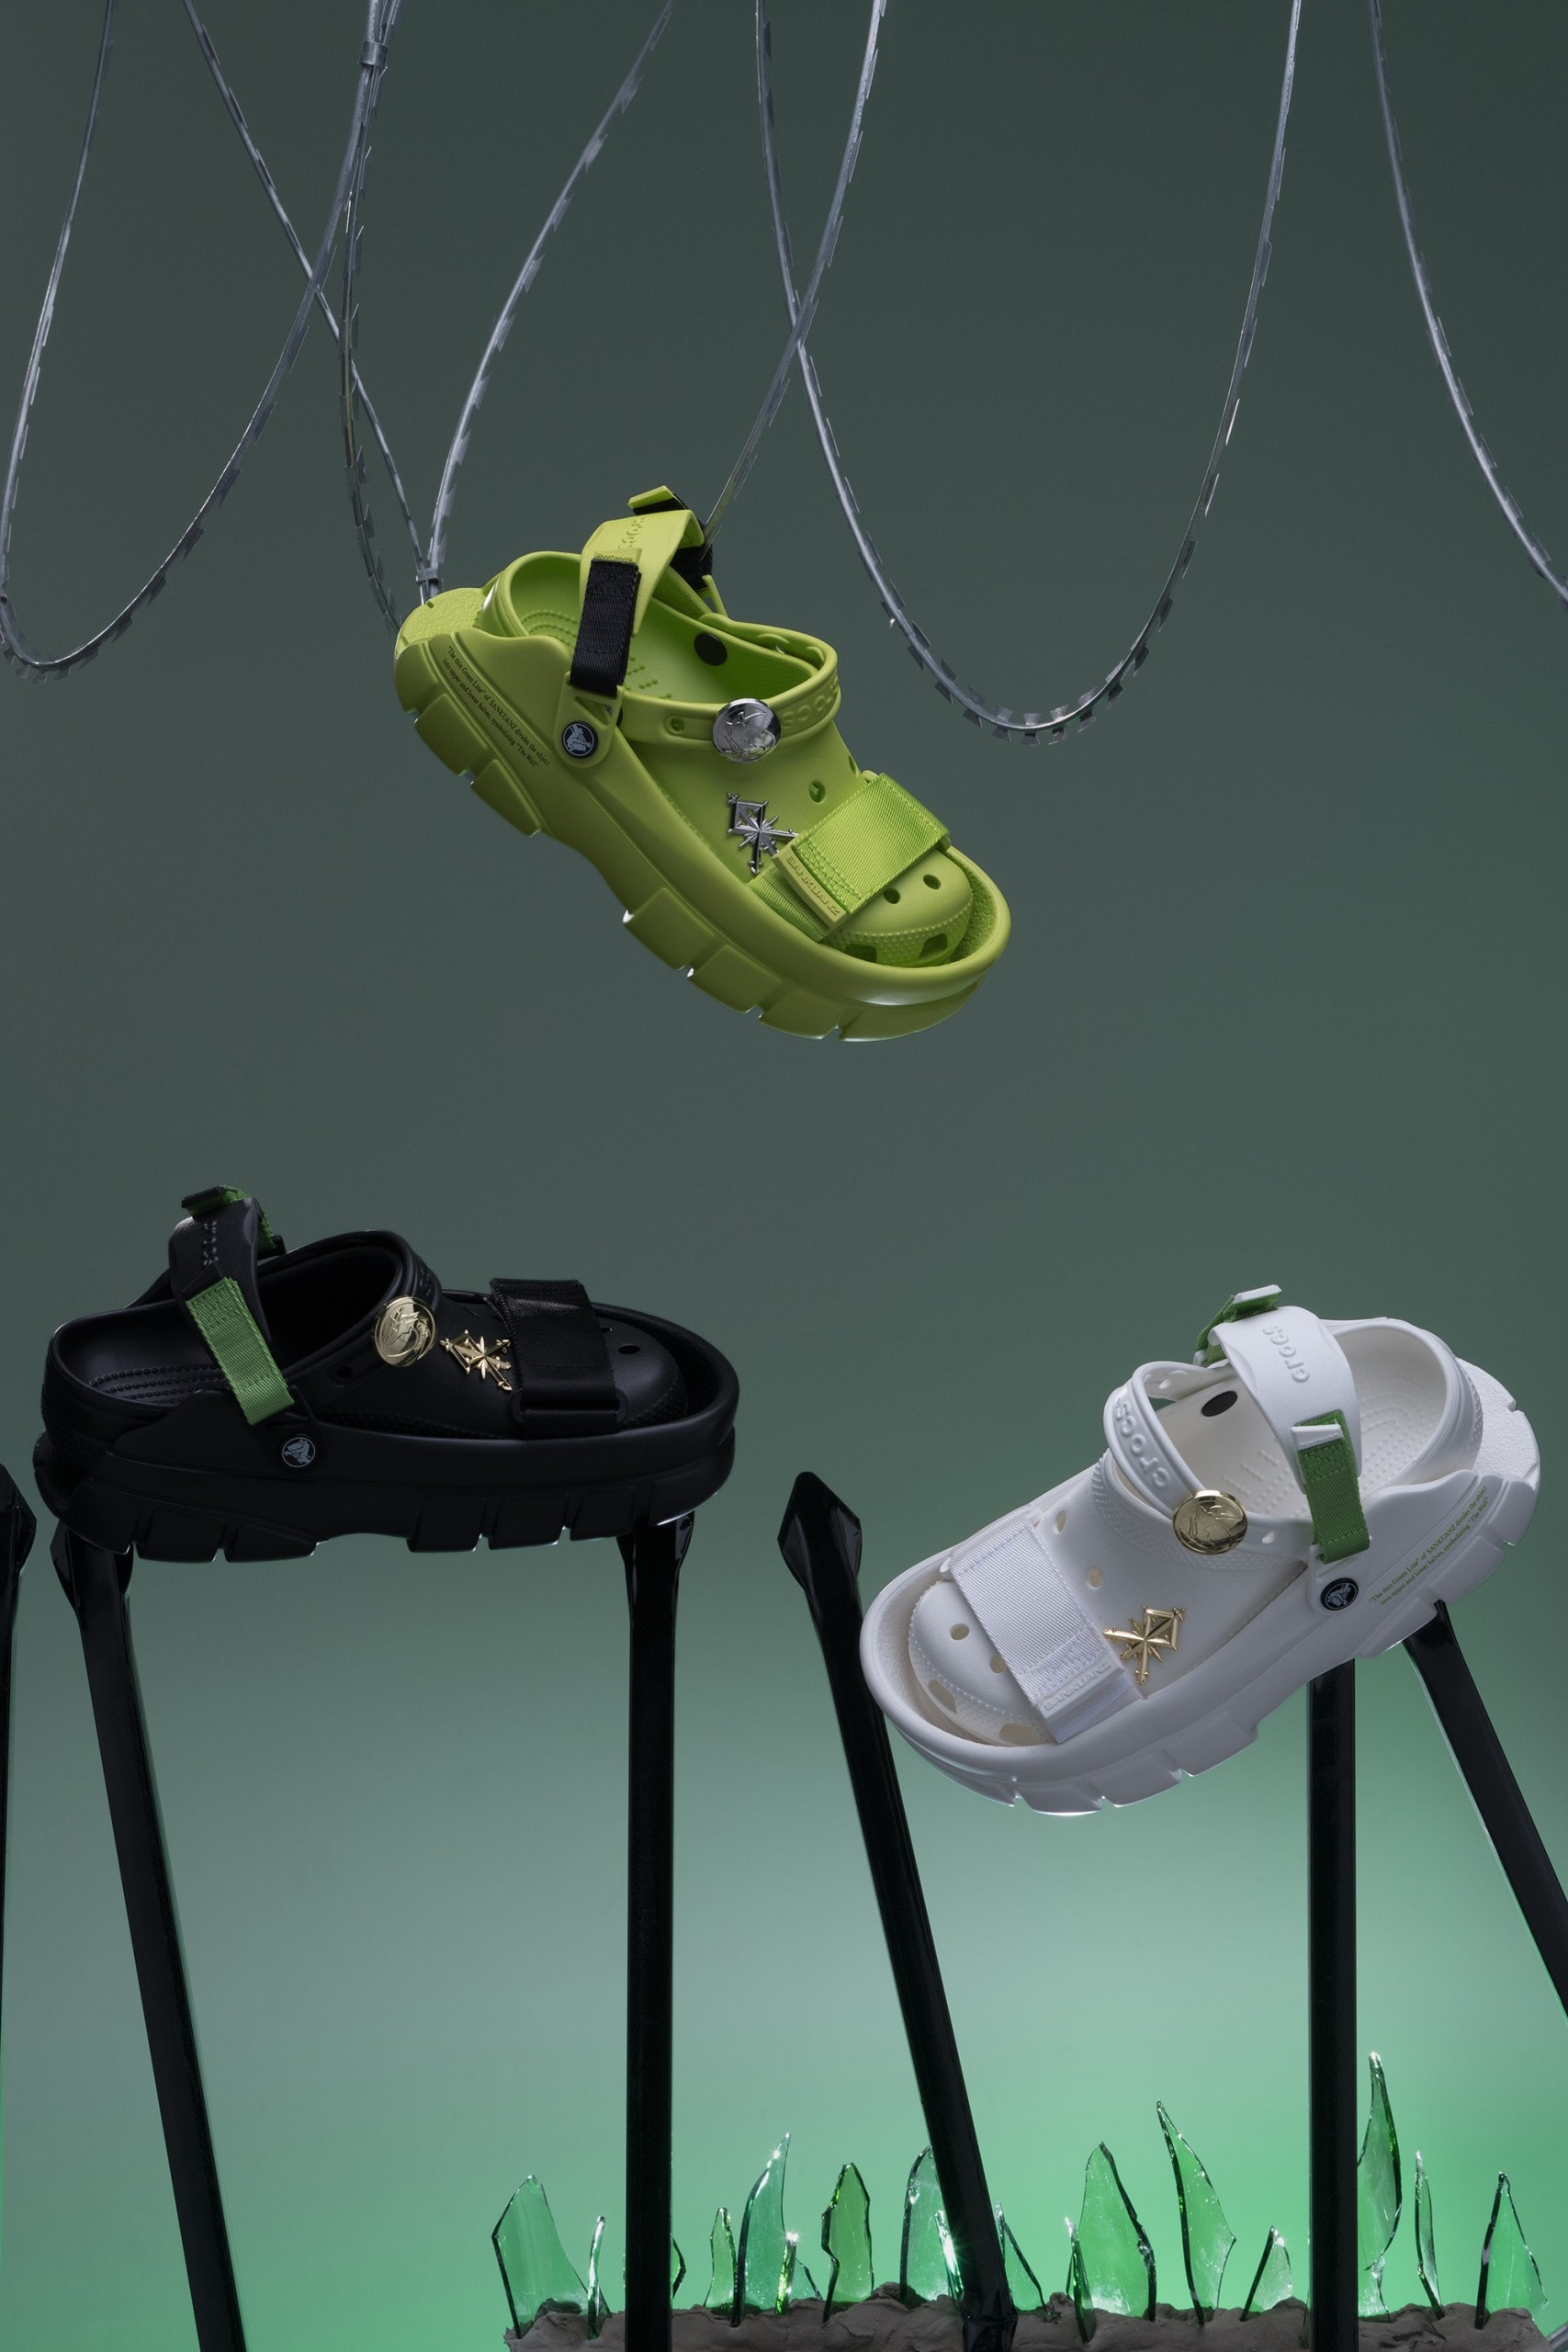 Crocs Shrek Shoe Charm Plastic Shoe Charm Price in India - Buy